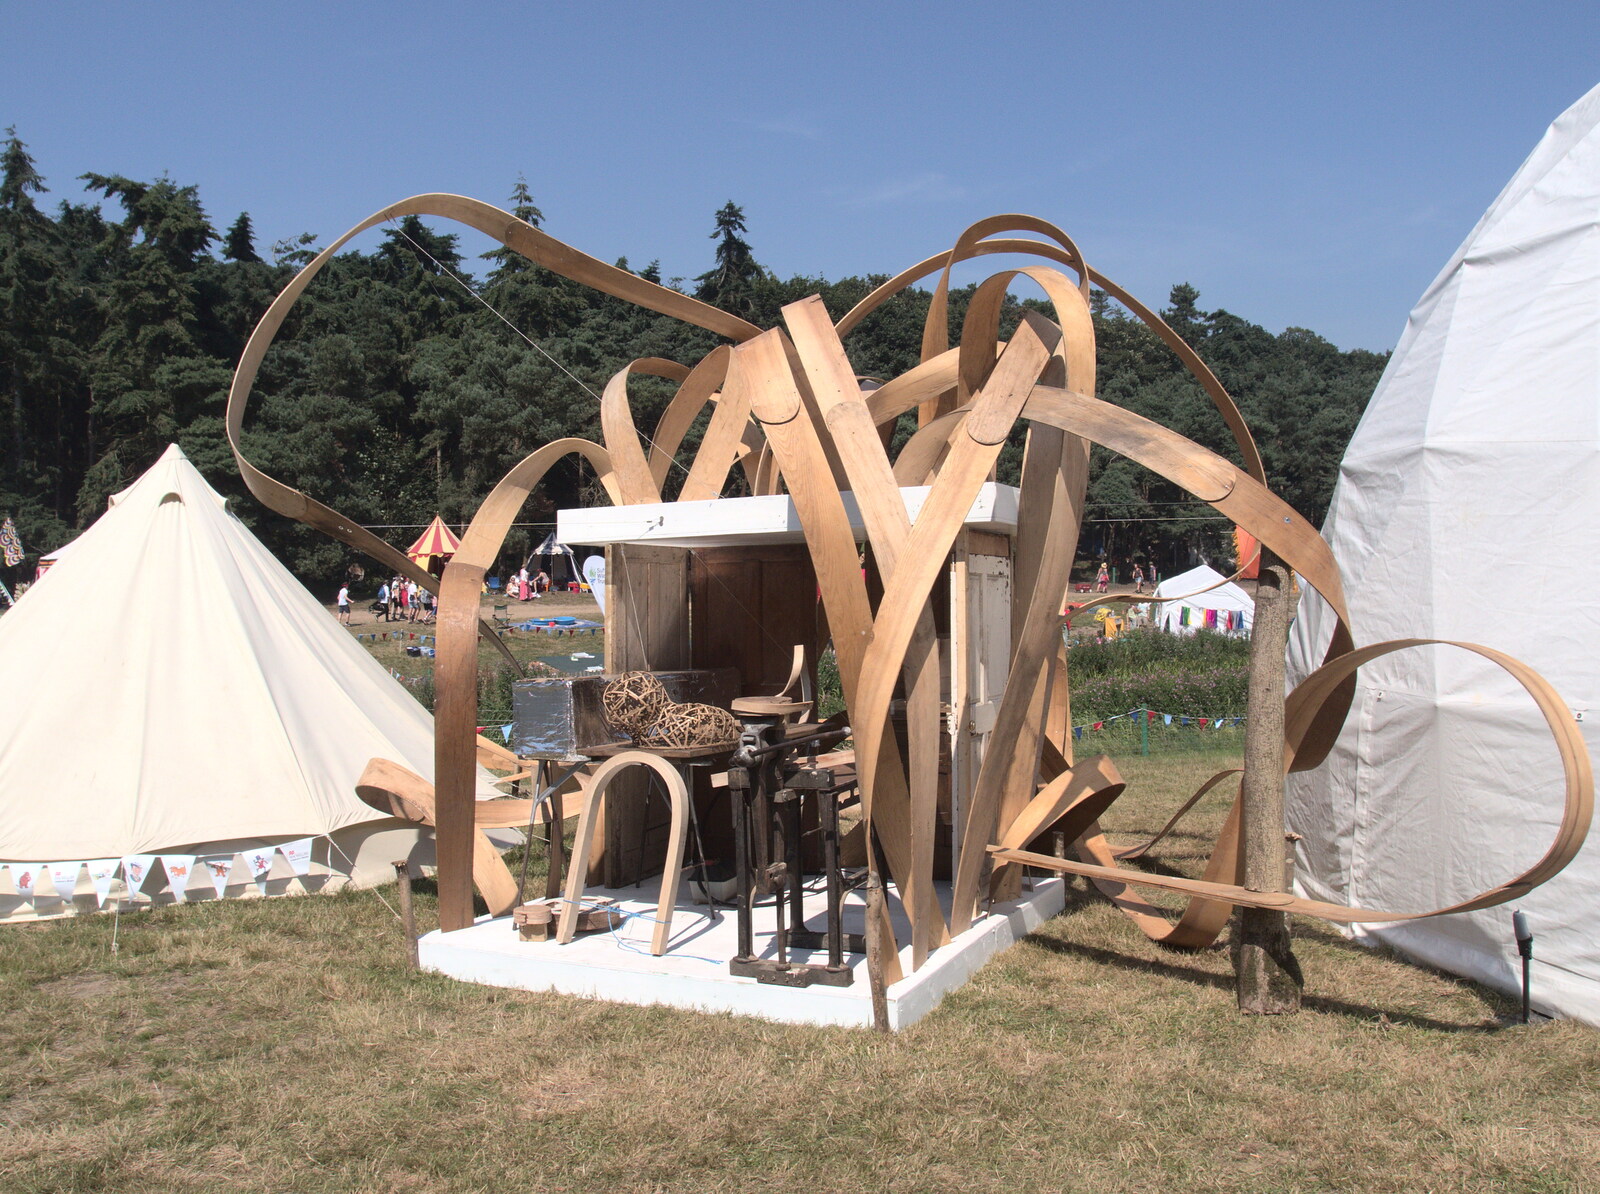 Cool wooden sculpture from Latitude Festival, Henham Park, Southwold, Suffolk - 17th July 2014